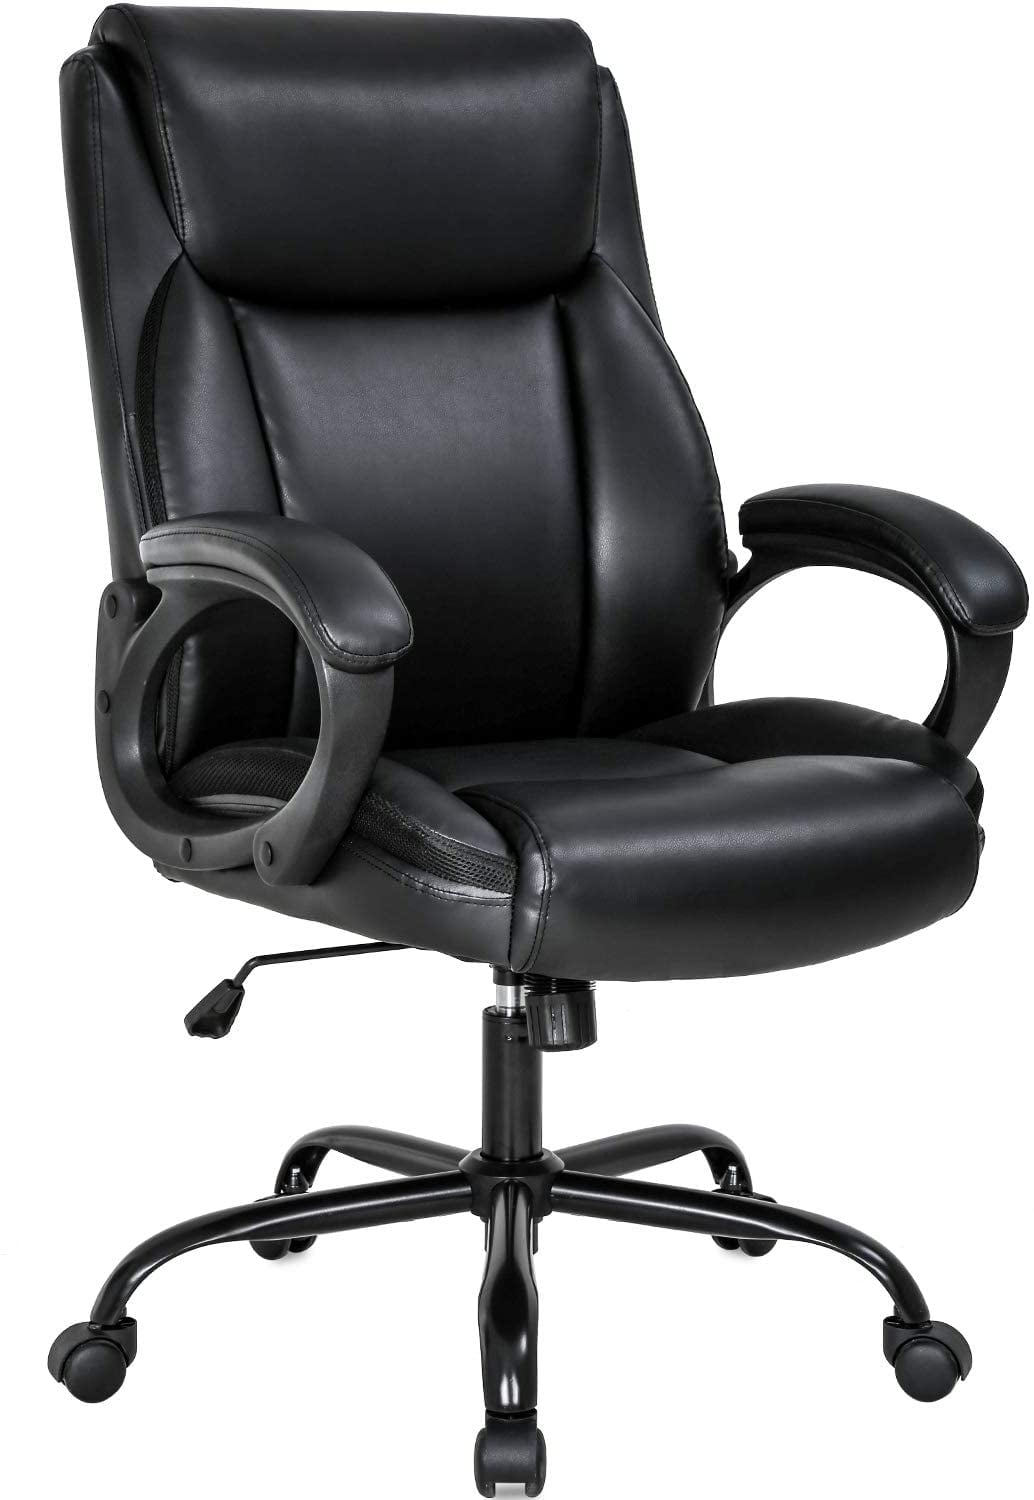 Executive Office Chair High-Back Task Ergonomic Computer Desk Study PU Leather 